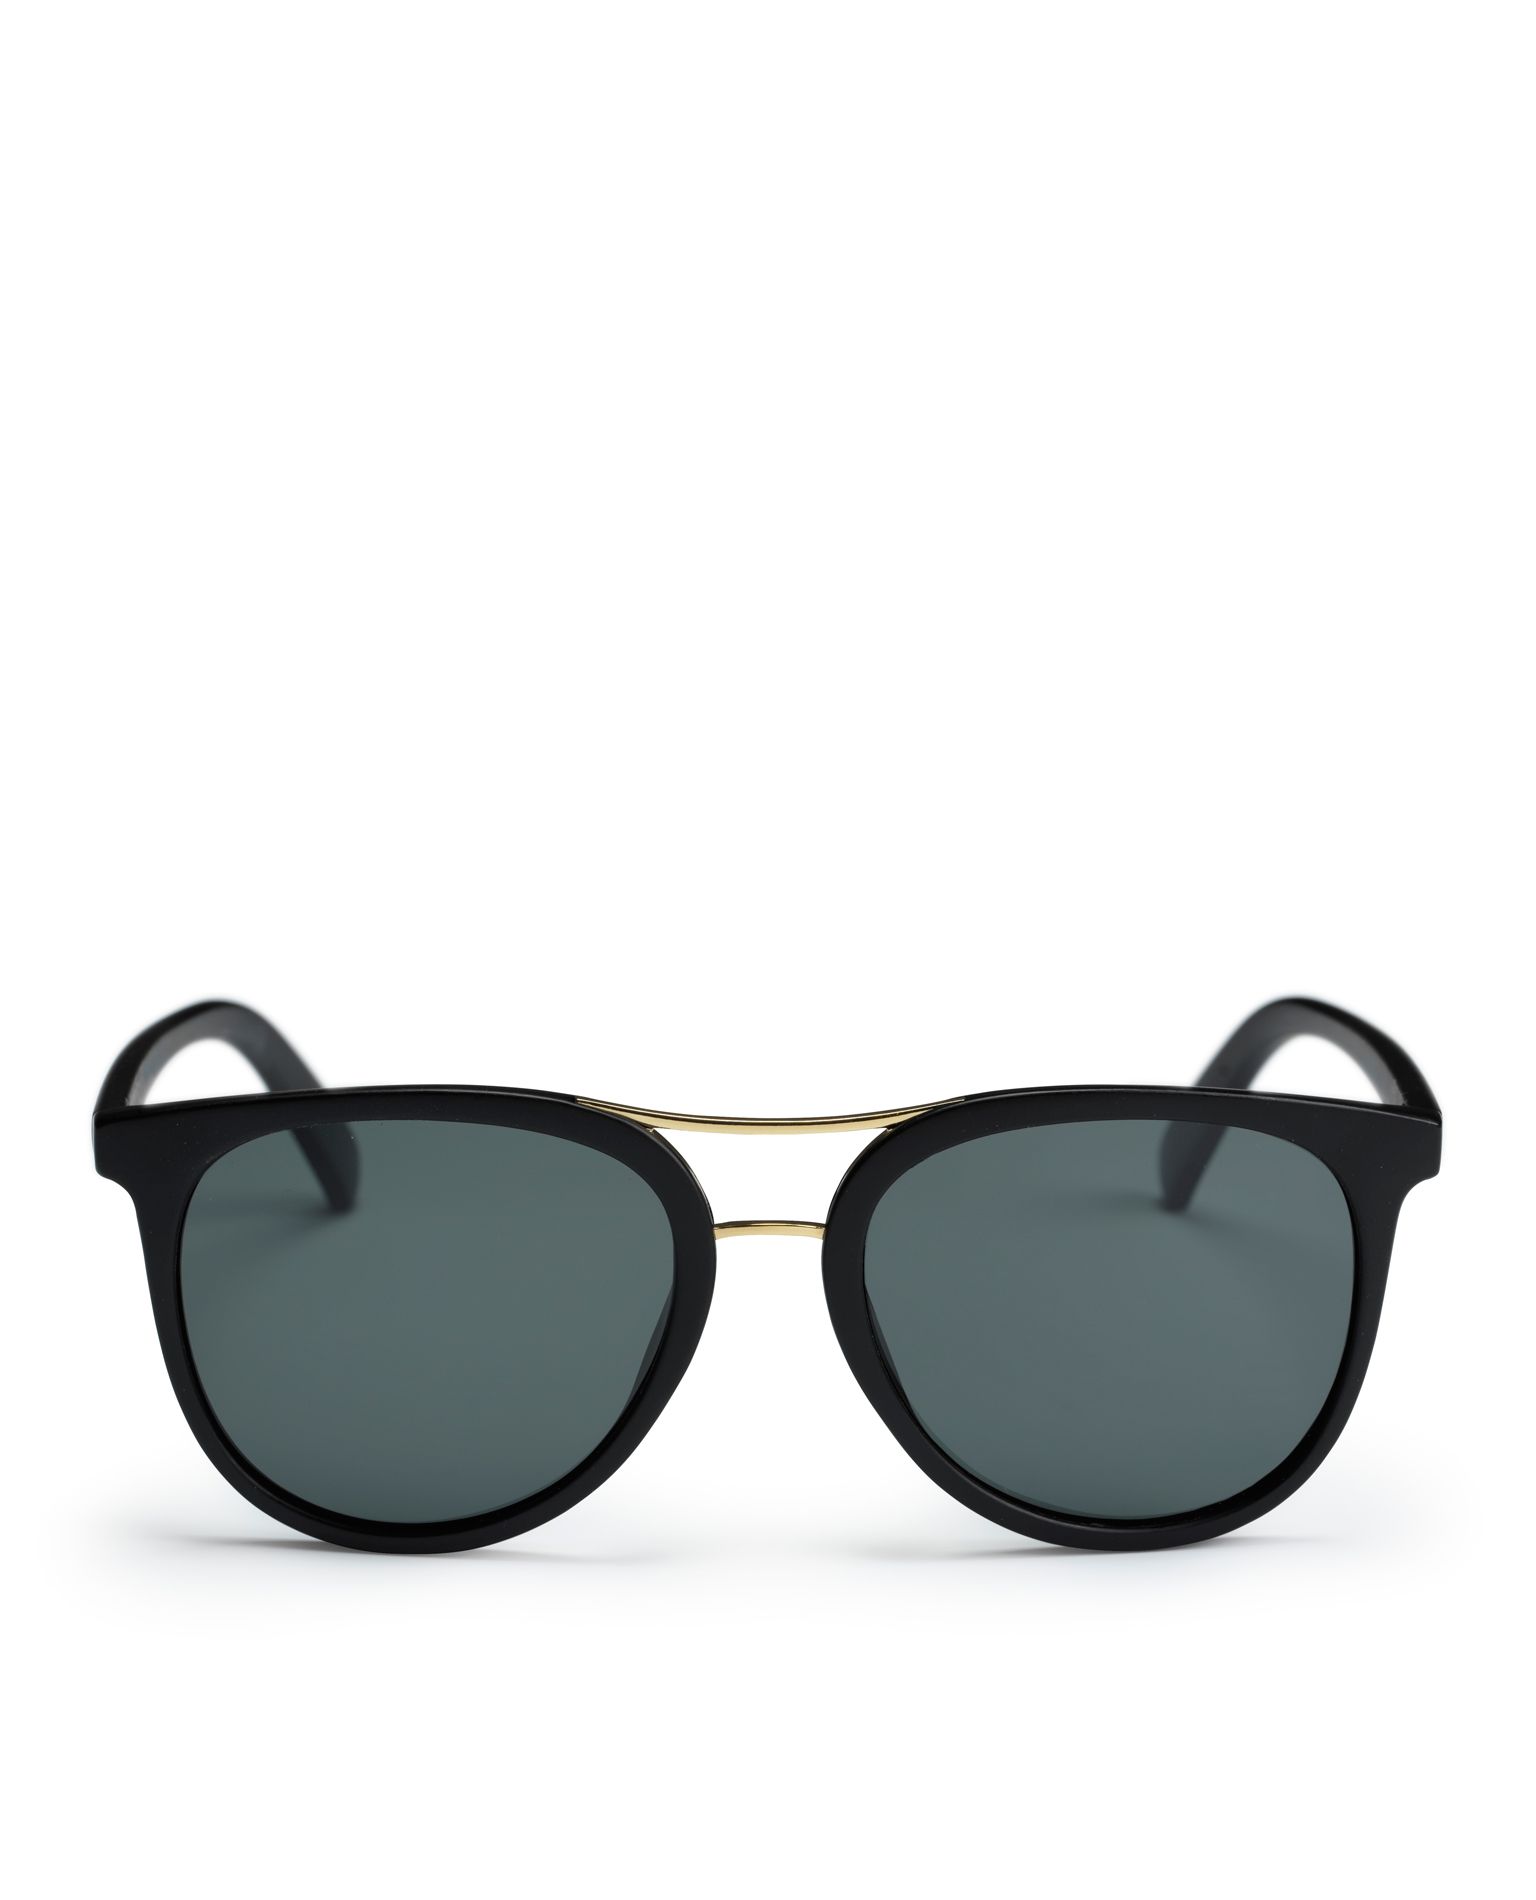 Oslo Sunglasses CHPO - 3753 - Sunglasses - Jerone.com